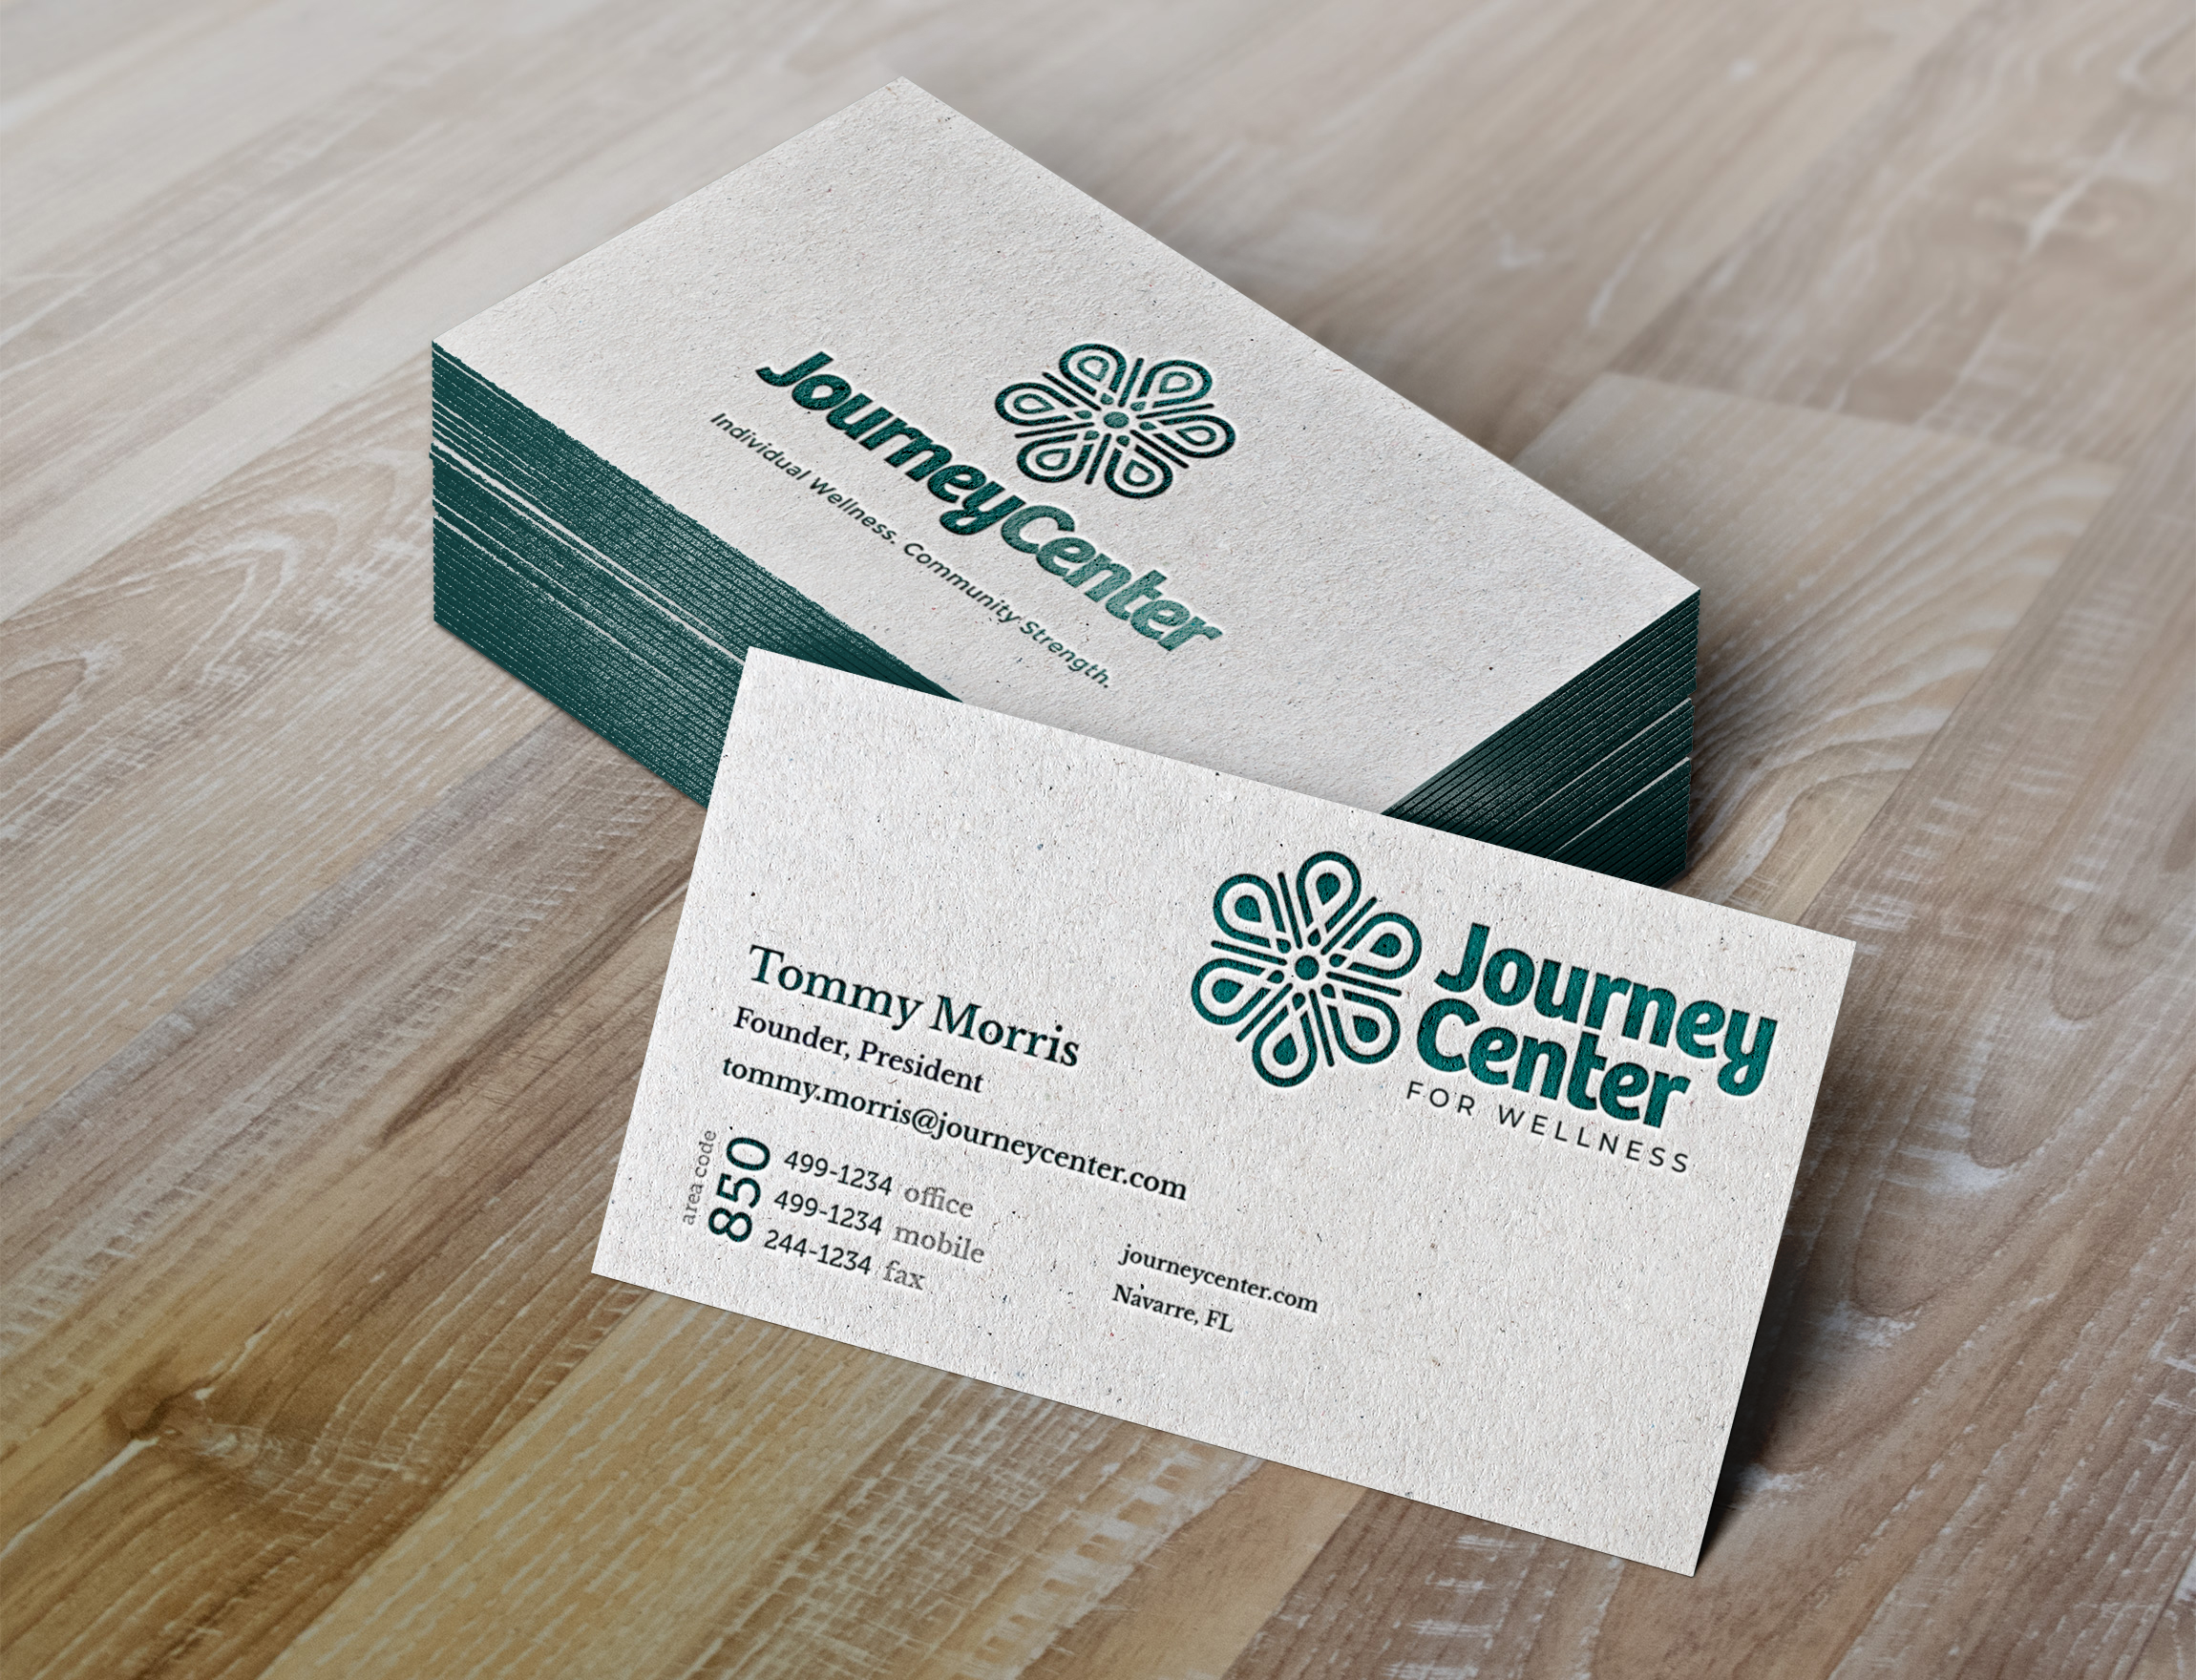 Journey Center business cards